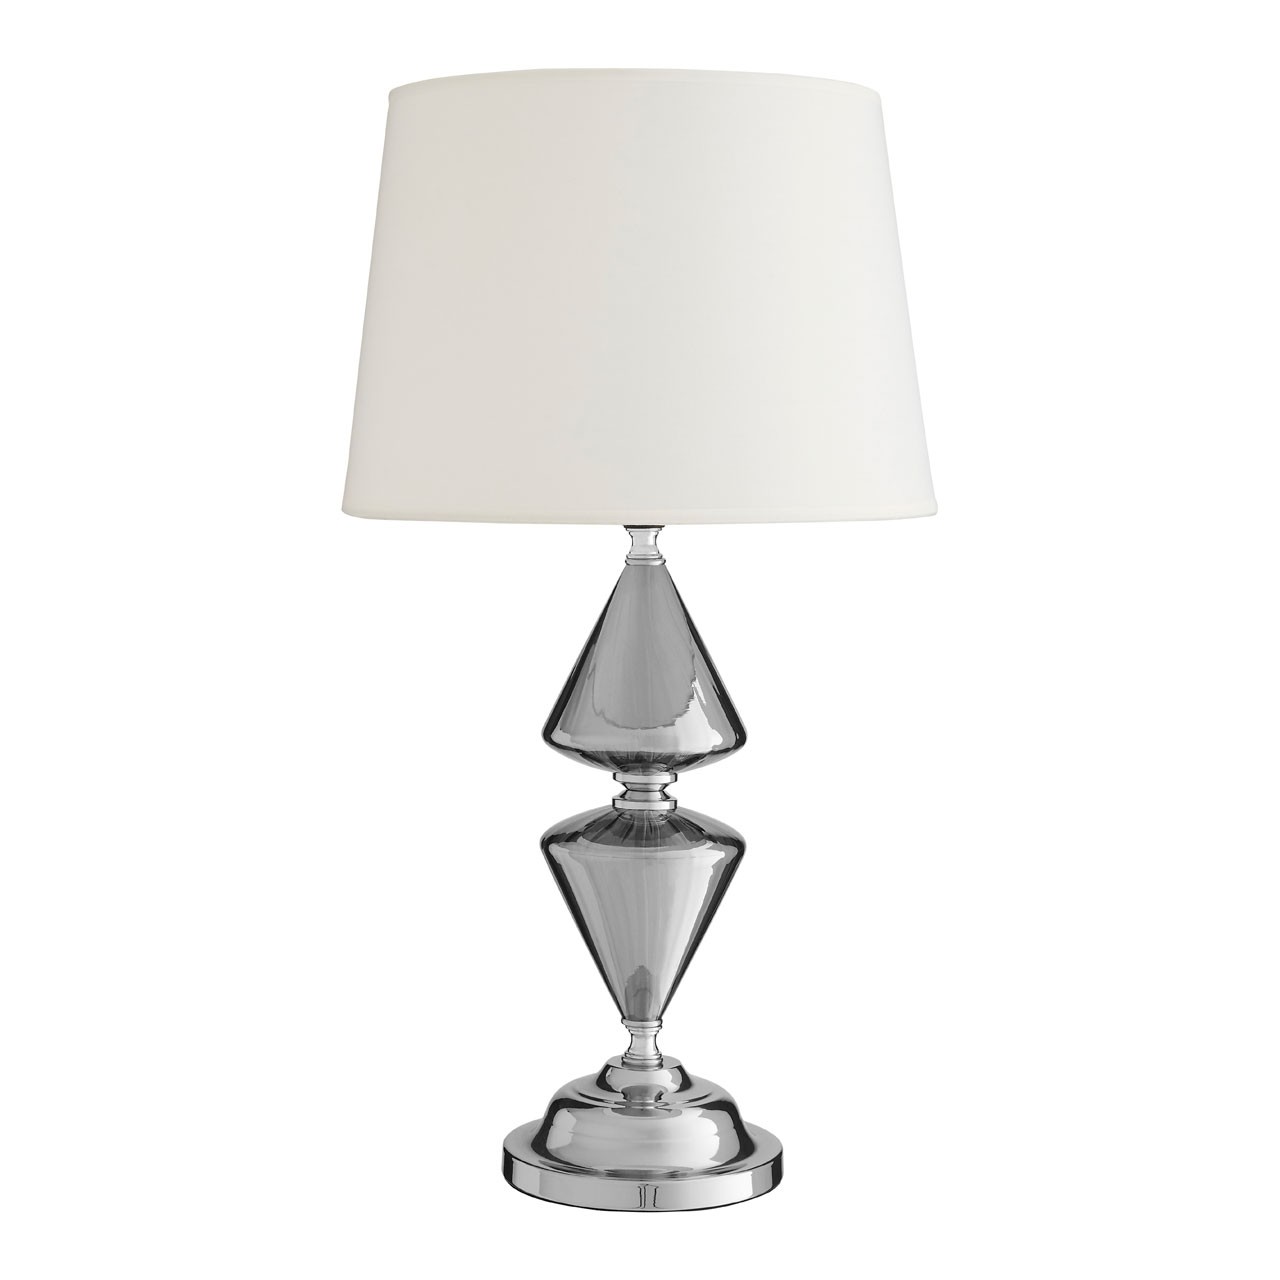 Prime Furnishing Honor Table Lamp, Ceramic - White Pleat Shade